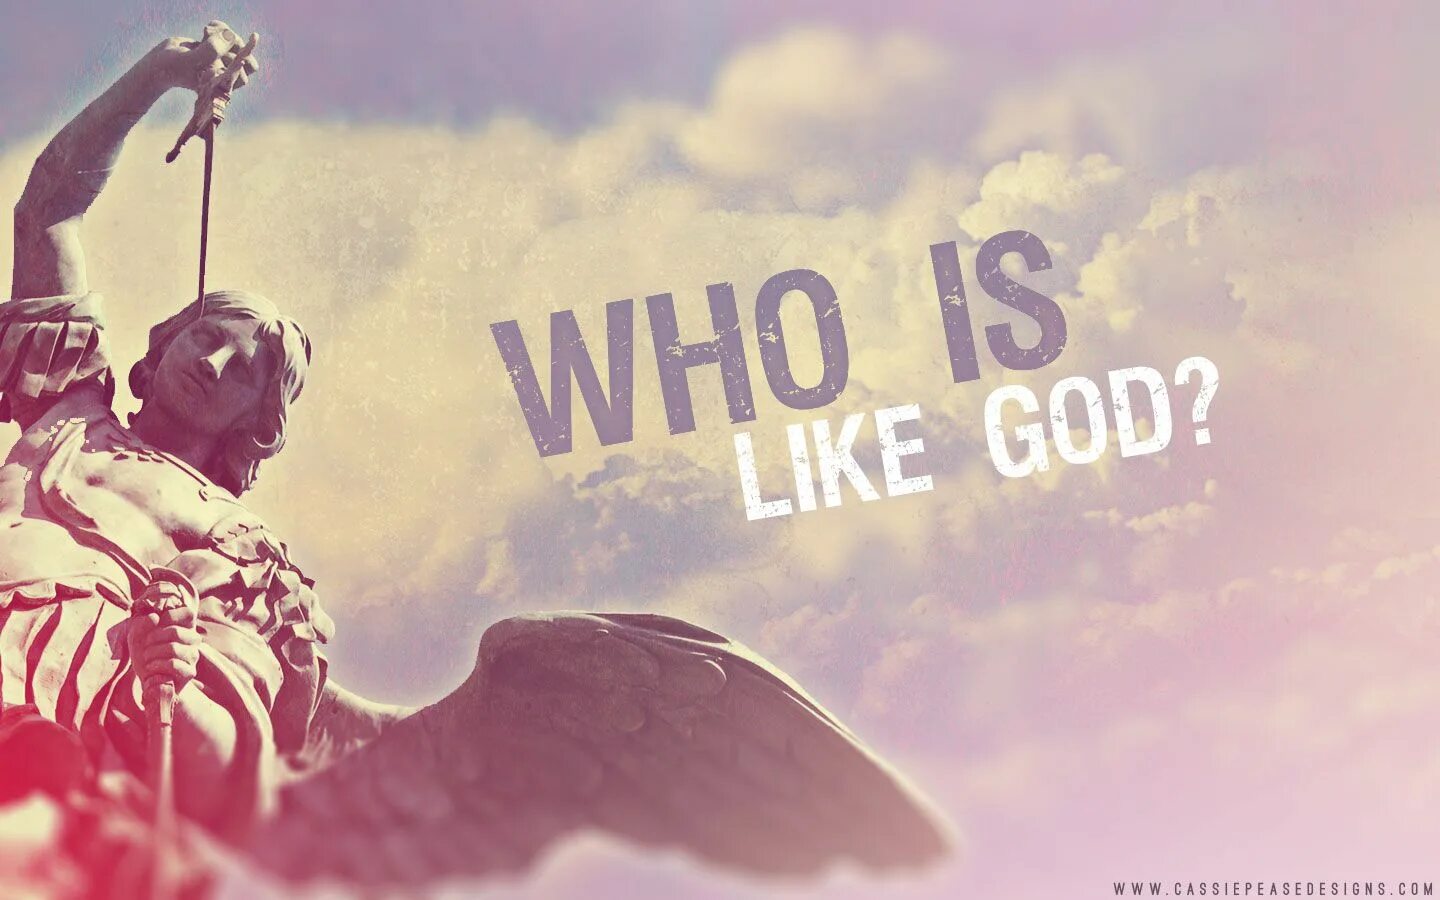 Like you re god. Feel like God аватарка. Feel like God обложка. Feel like God обои. Аватарки для стима feel like God.